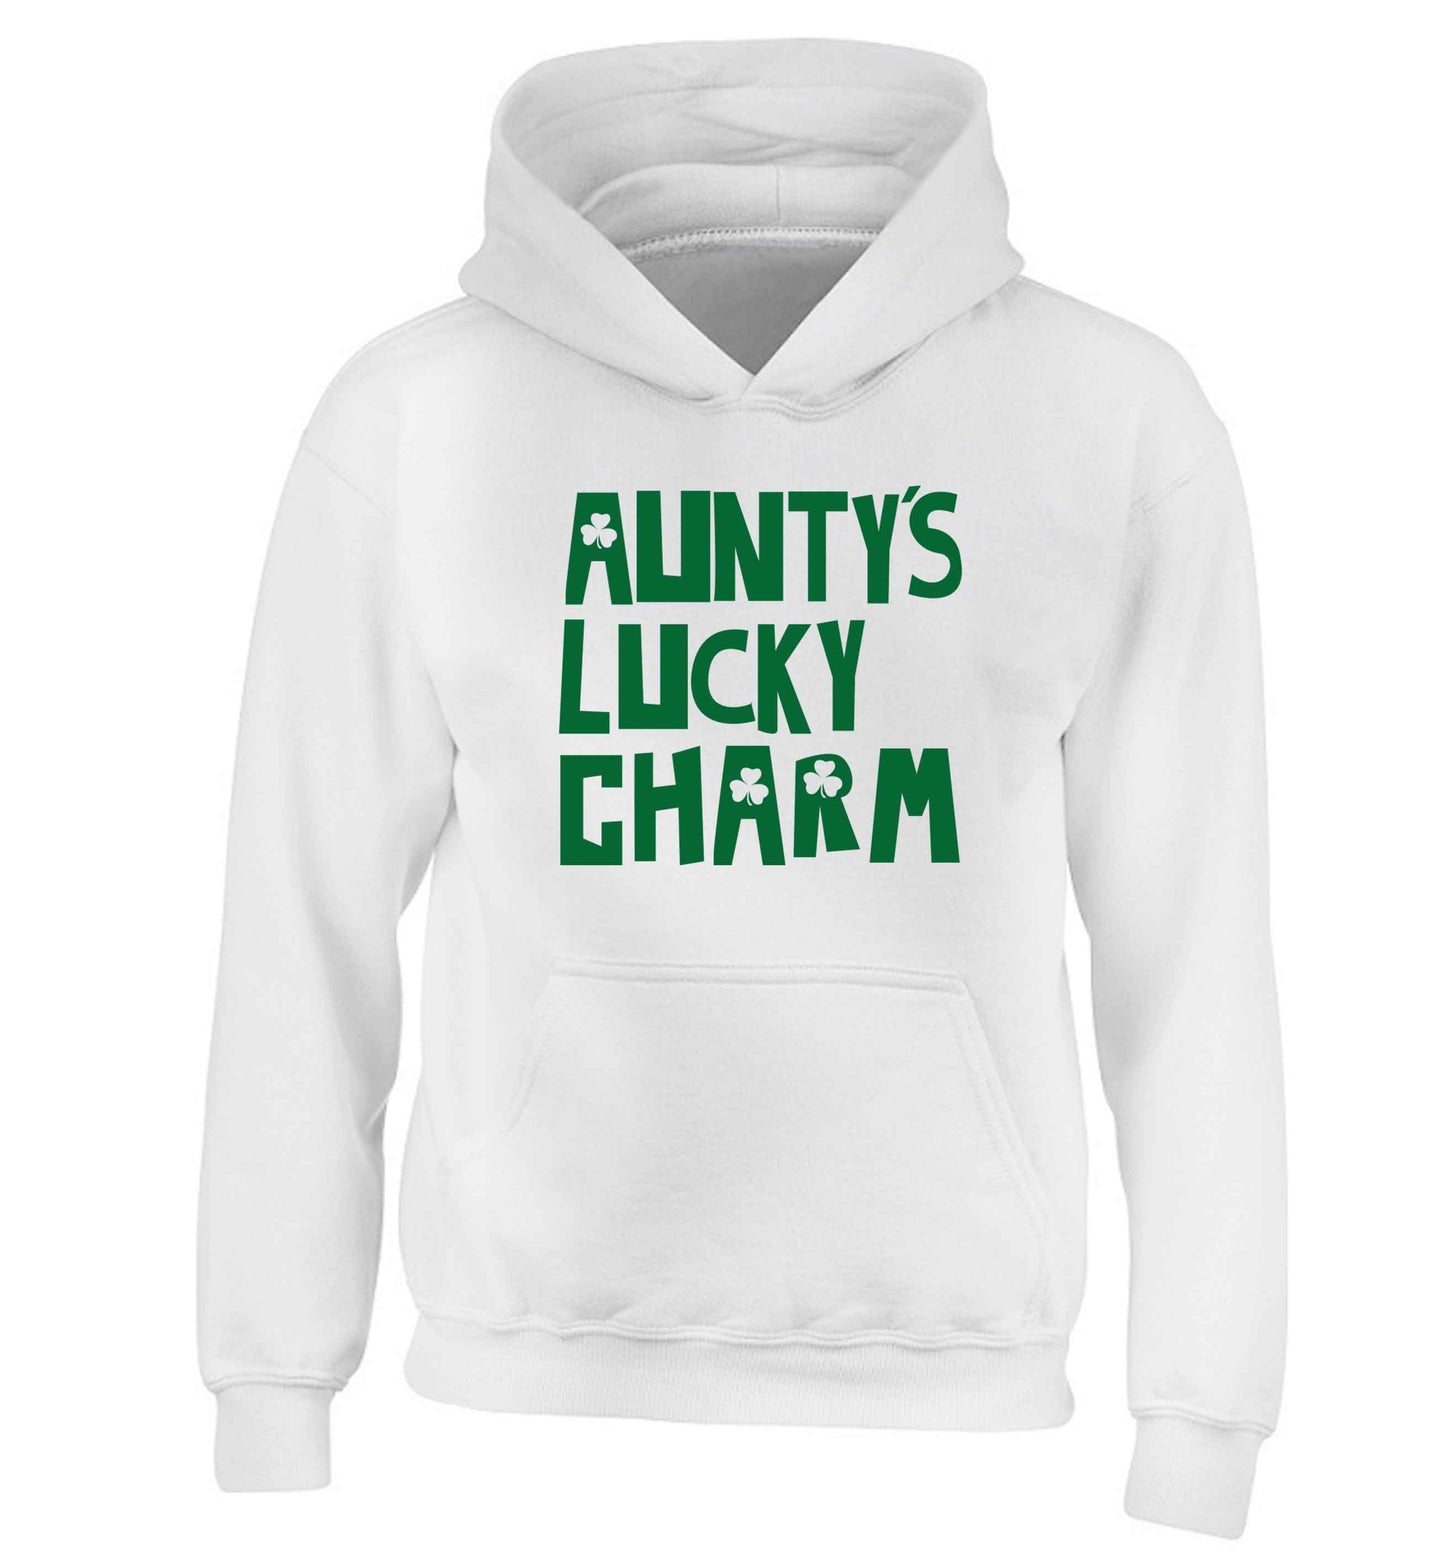 Aunty's lucky charm children's white hoodie 12-13 Years